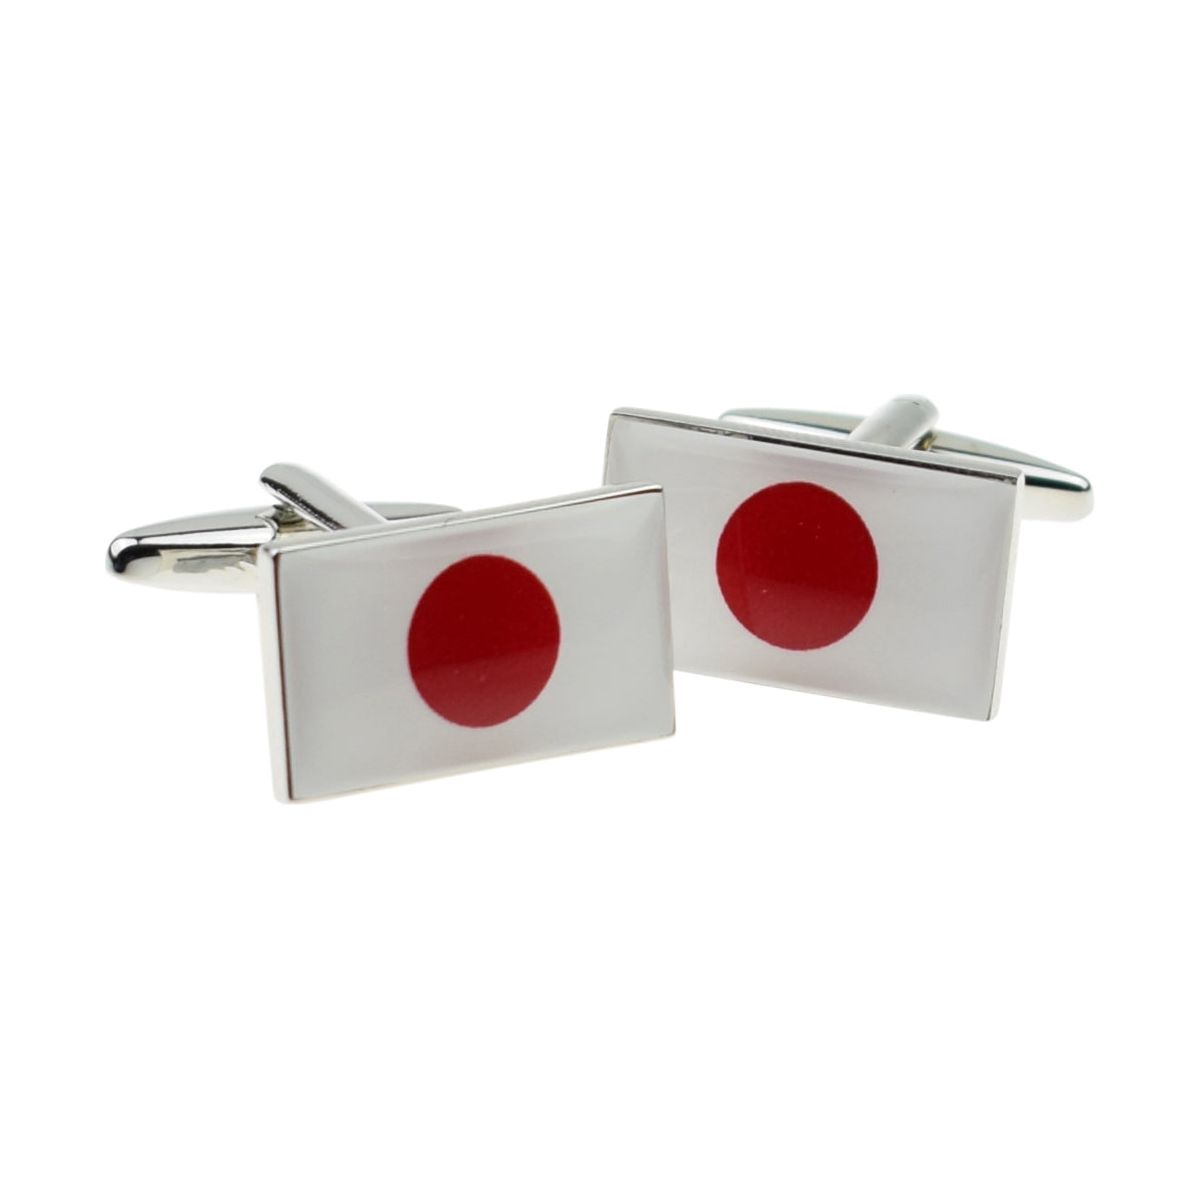 Japan Flag Cufflinks - Ashton and Finch